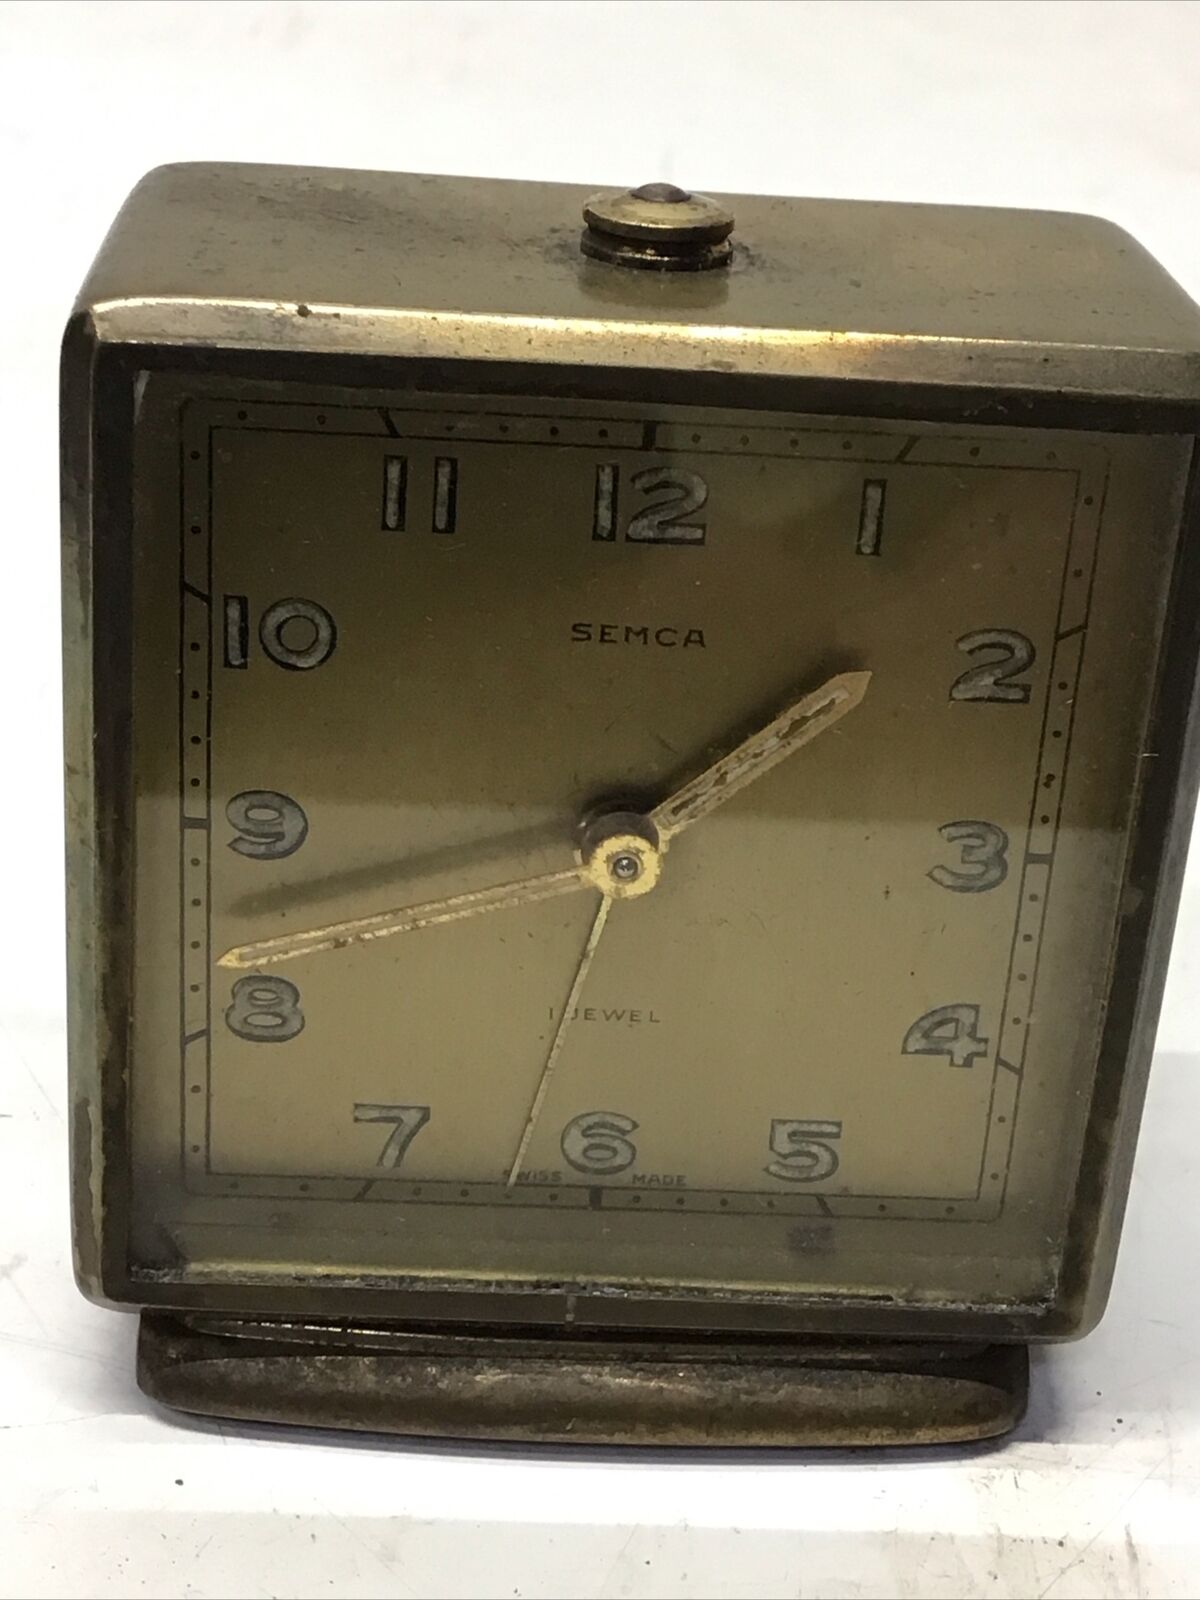 Vintage Semca Travel Alarm Clock Swiss Made 1 Jewel—Not Working 2.3/8”x1.5x2.5/8